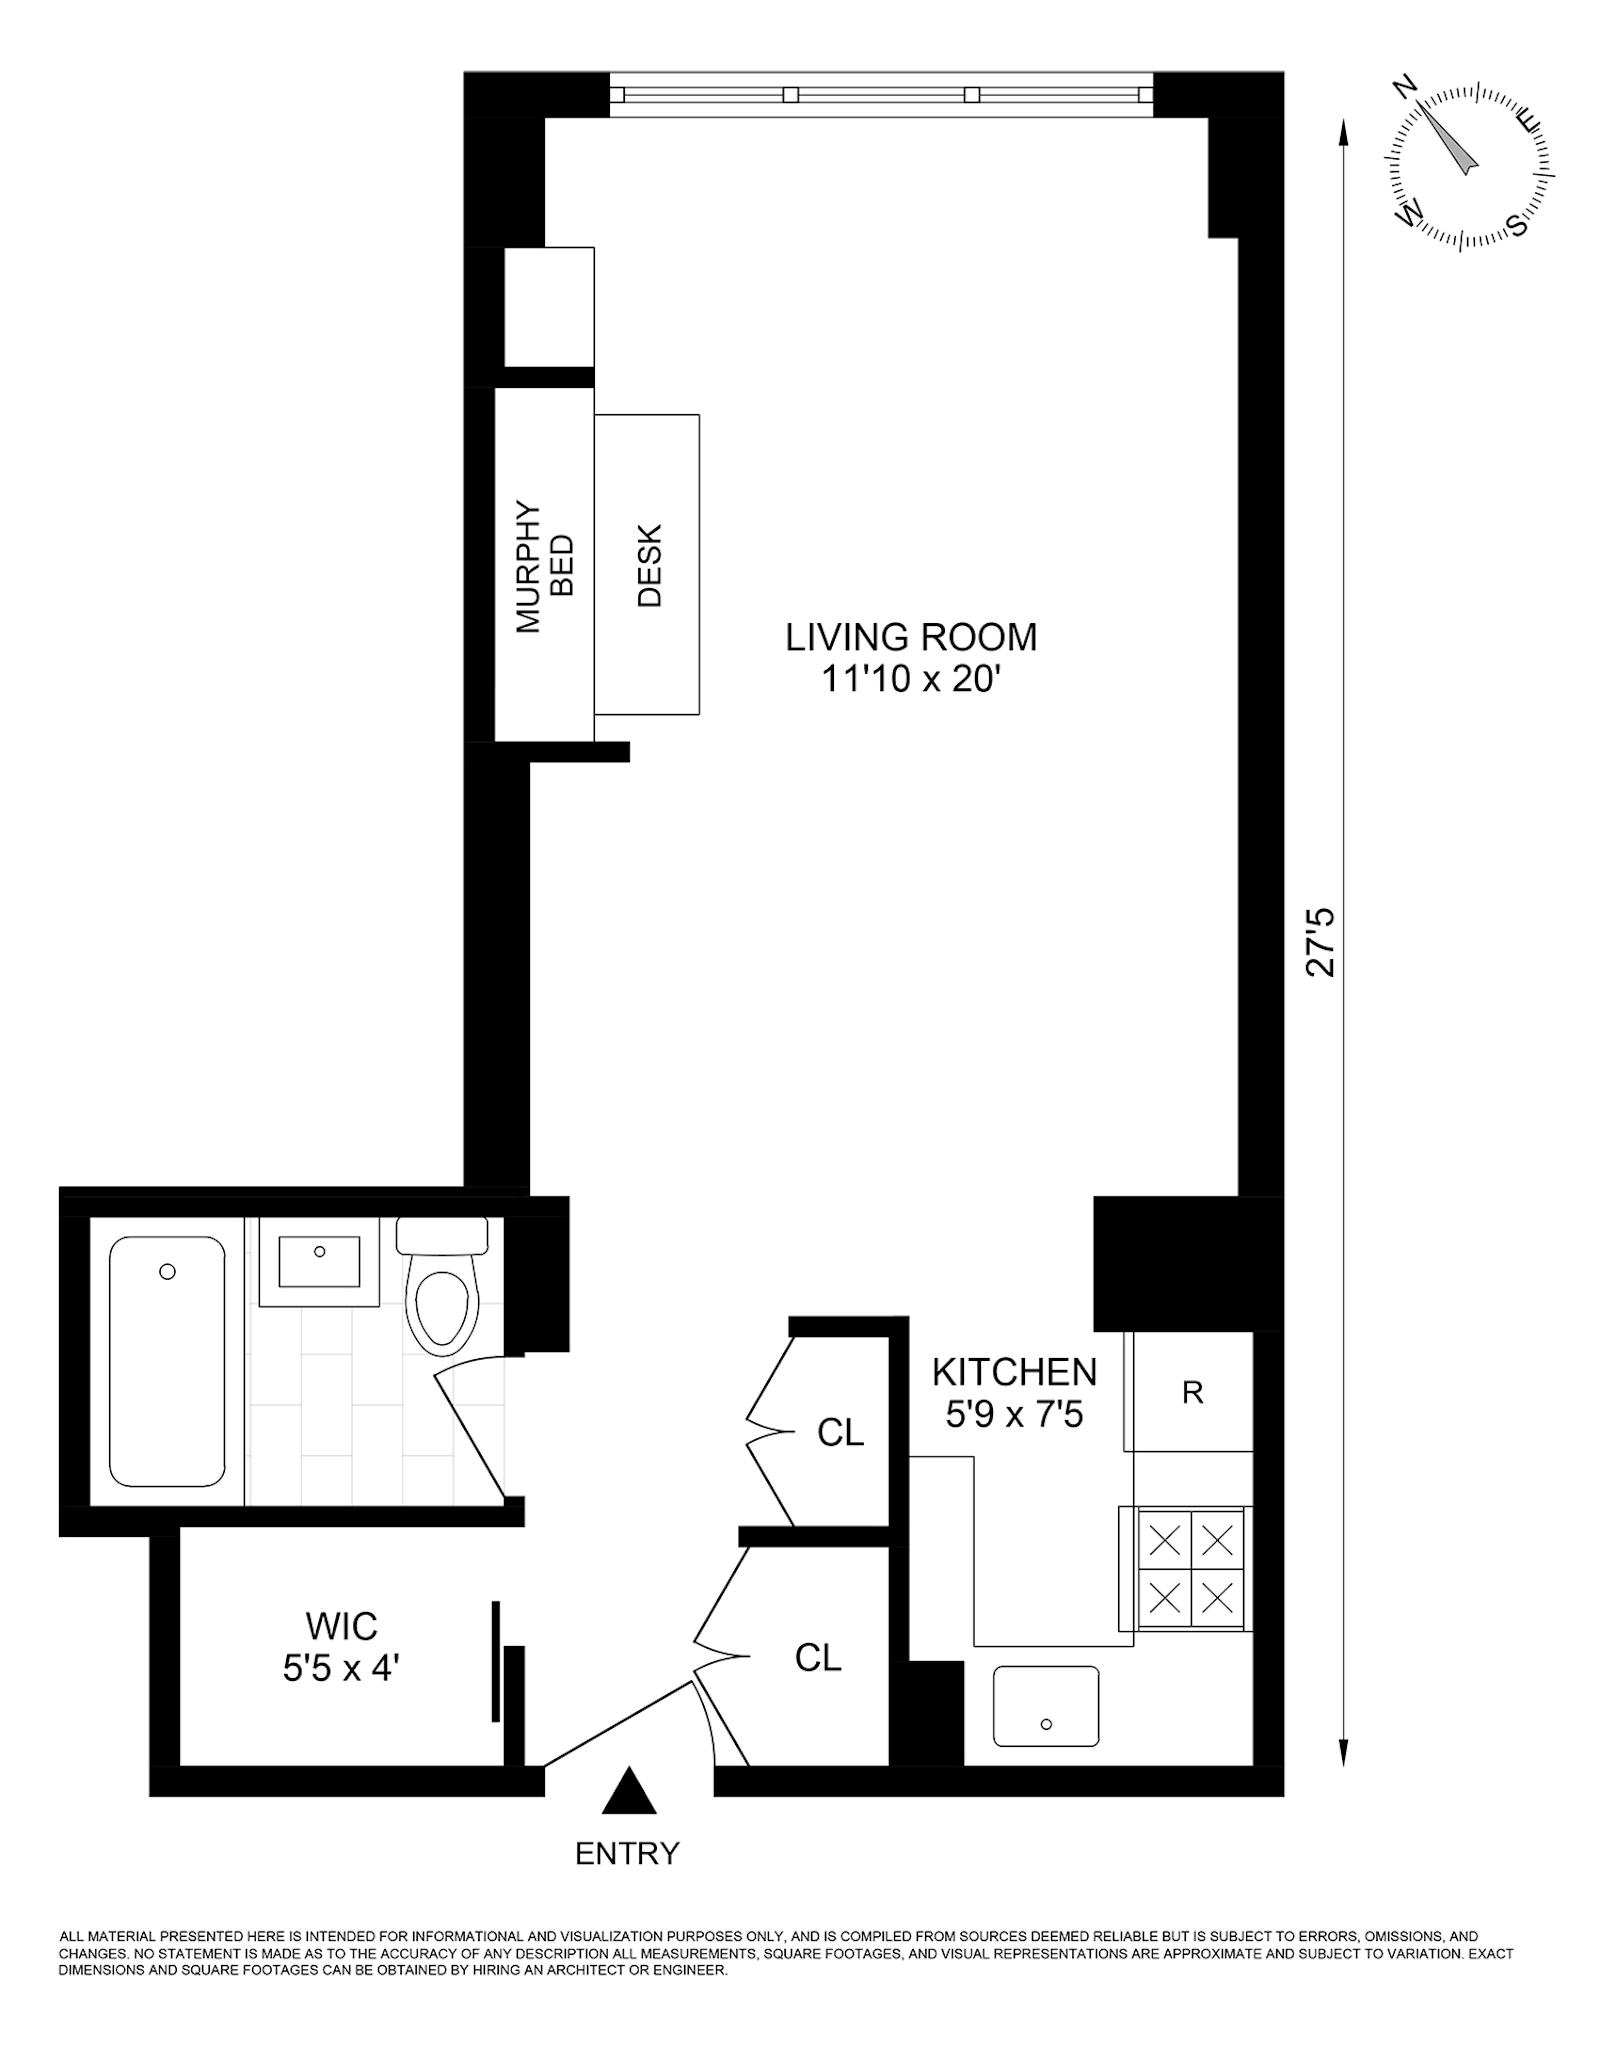 Floorplan for 430 West 34th Street, 12G